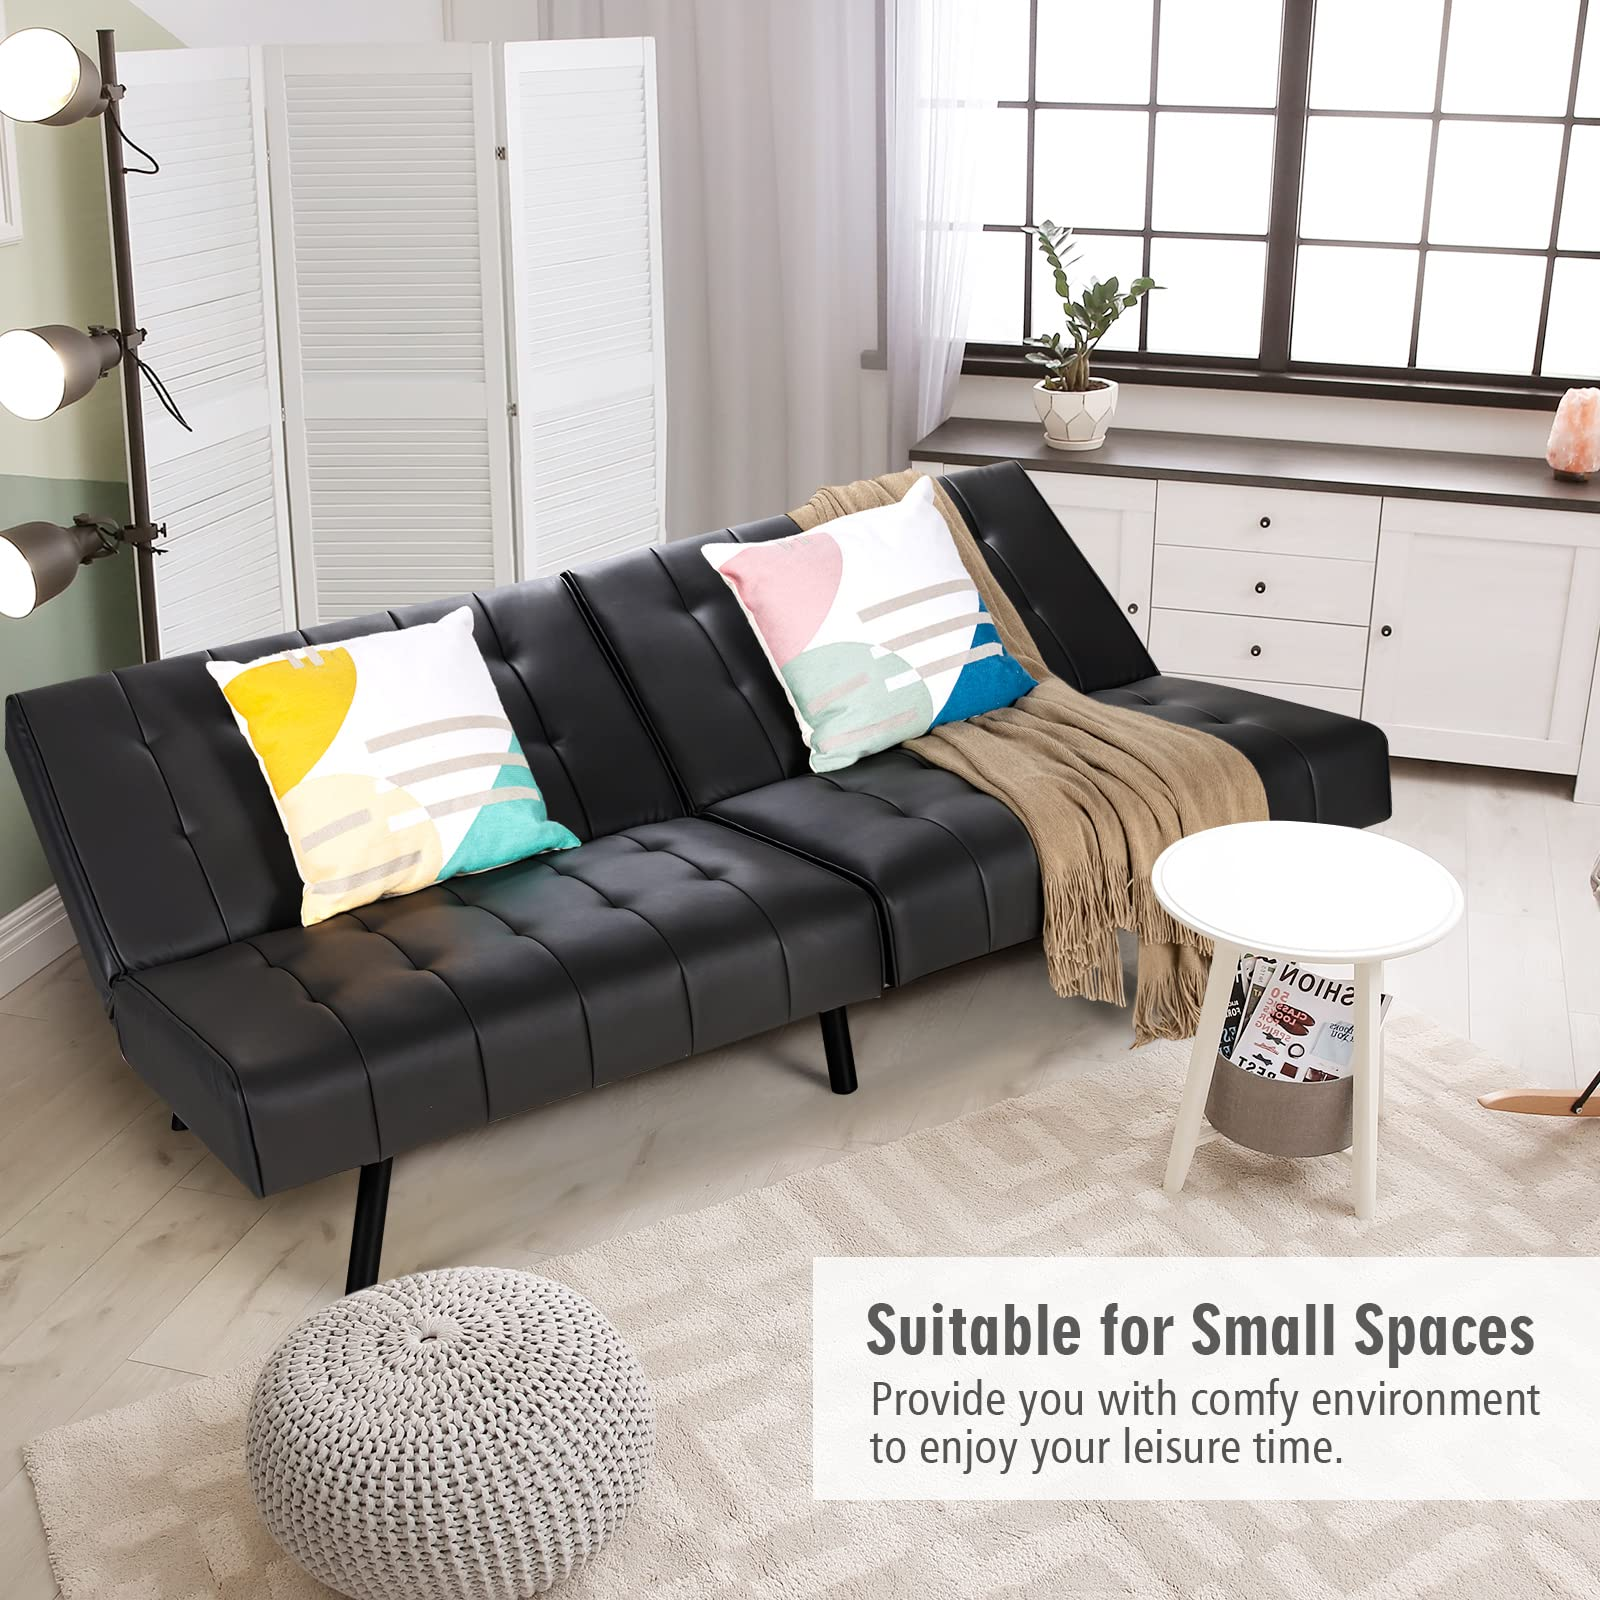 Giantex Convertible Sofa Bed, Futon Sleeper Couch